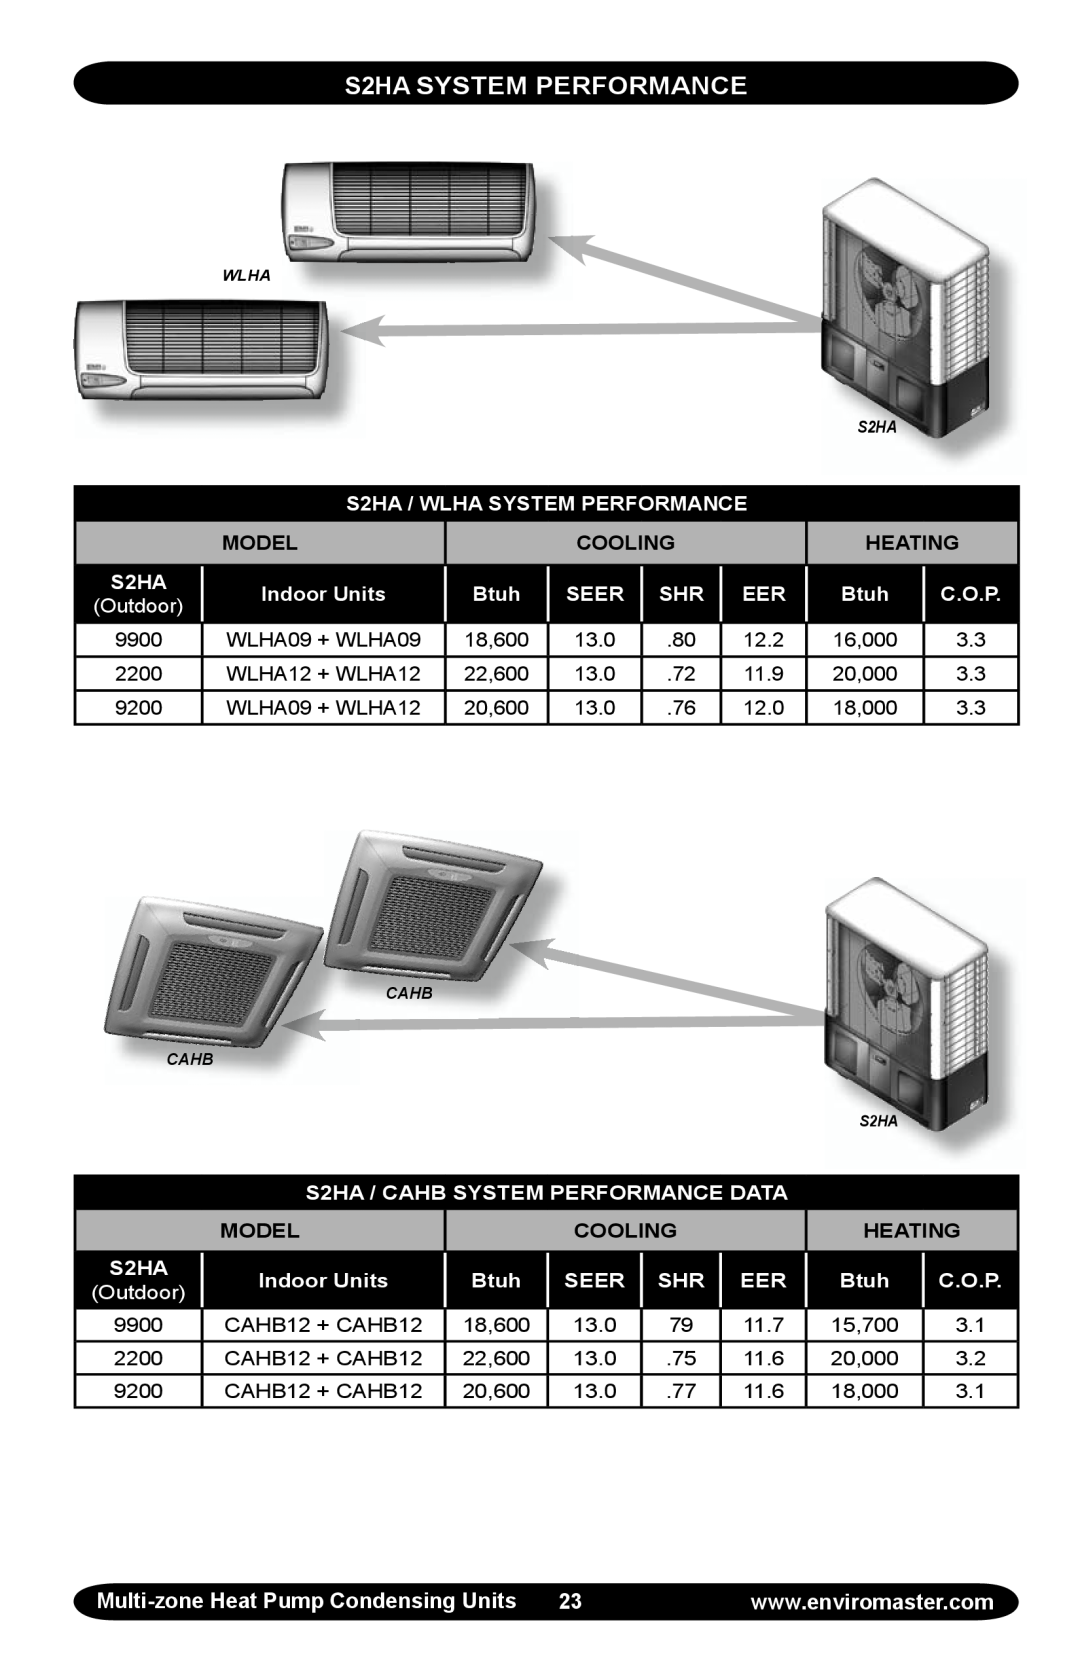 EMI T2HA manual S2HA SYSTEM PERFORMANCE, Model, Cooling, Heating, Outdoor 